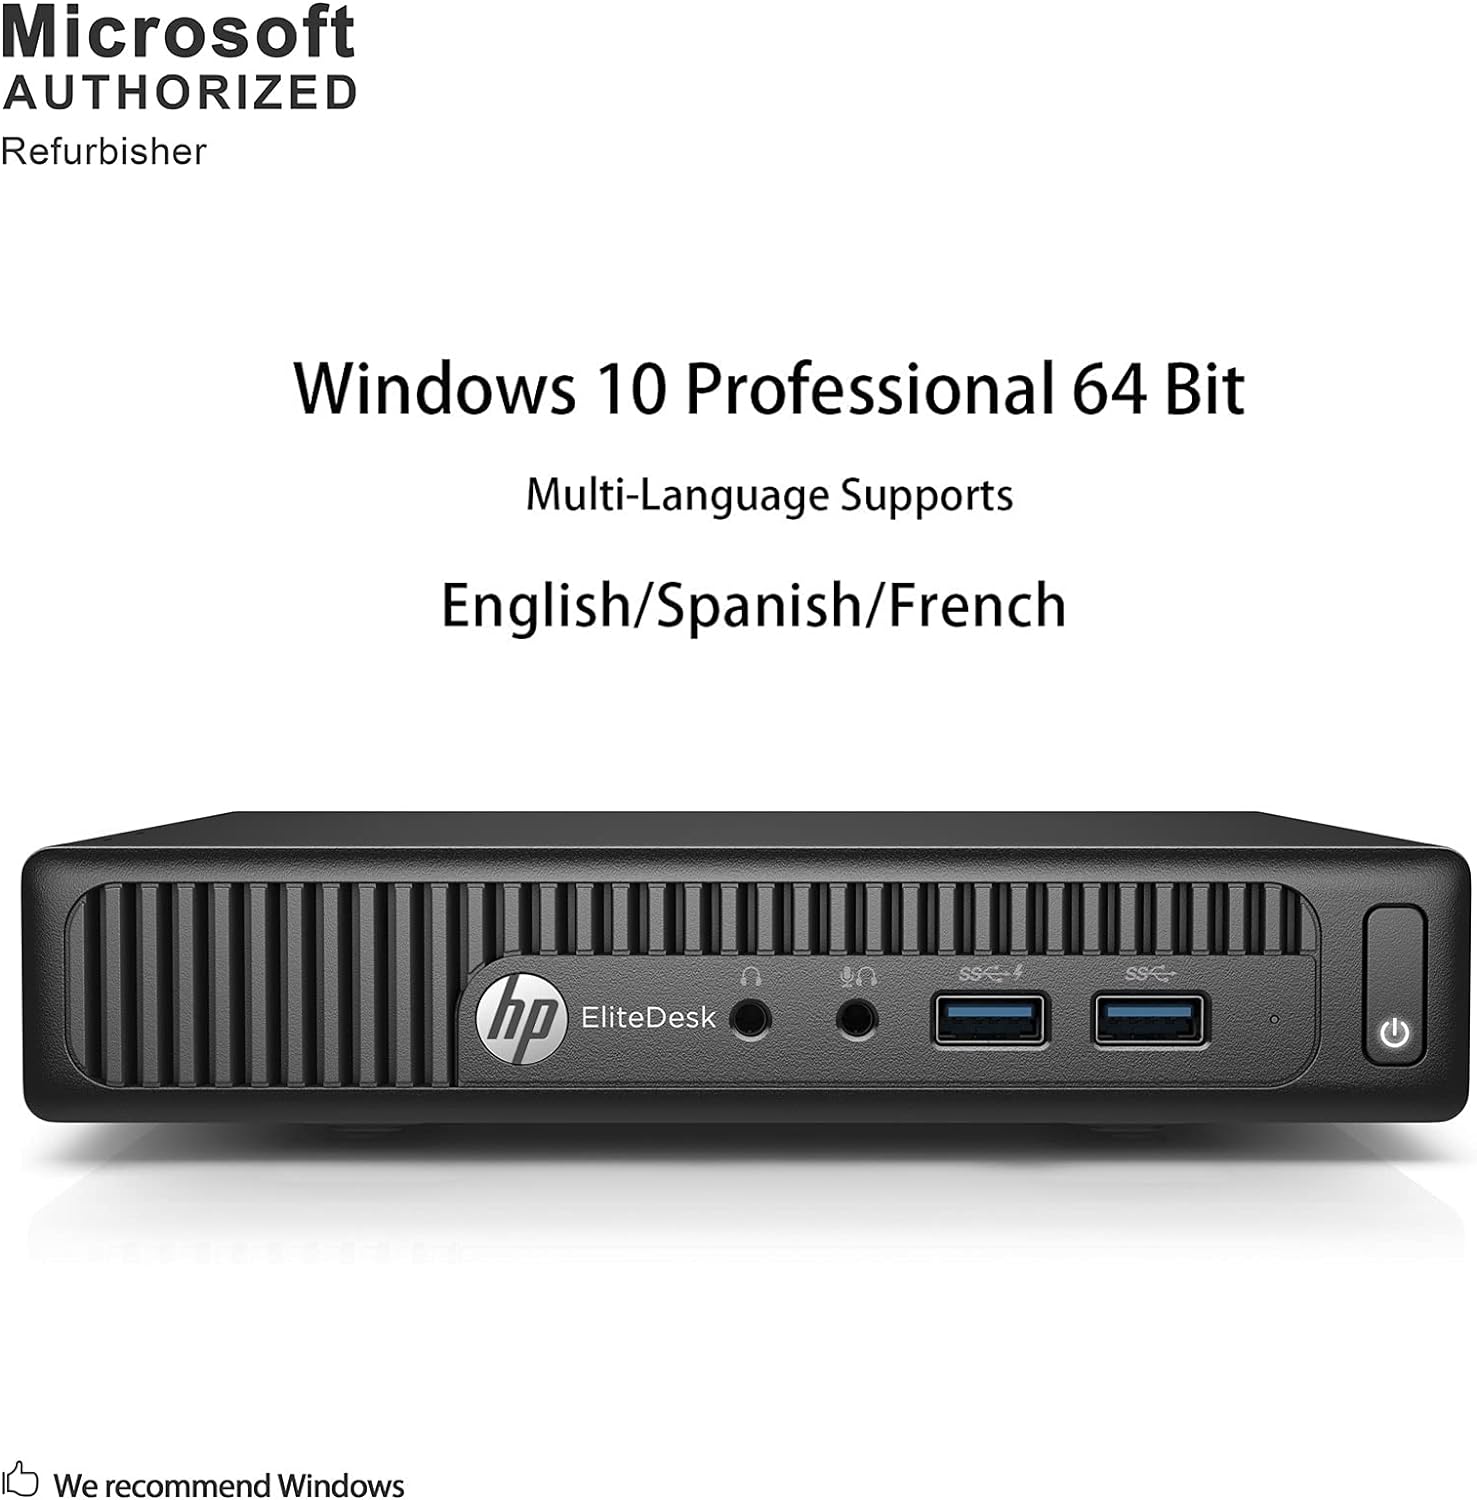 HP EliteDesk 705 G3 Desktop Mini Computer PC, AMD A10 PRO-8770E Quad Core up to 3.5 GHz, 12G DDR4, 1T SSD, WiFi, Bluetooth, Windows 10 Pro 64 Bit-Supports English/Spanish/French (Renewed)